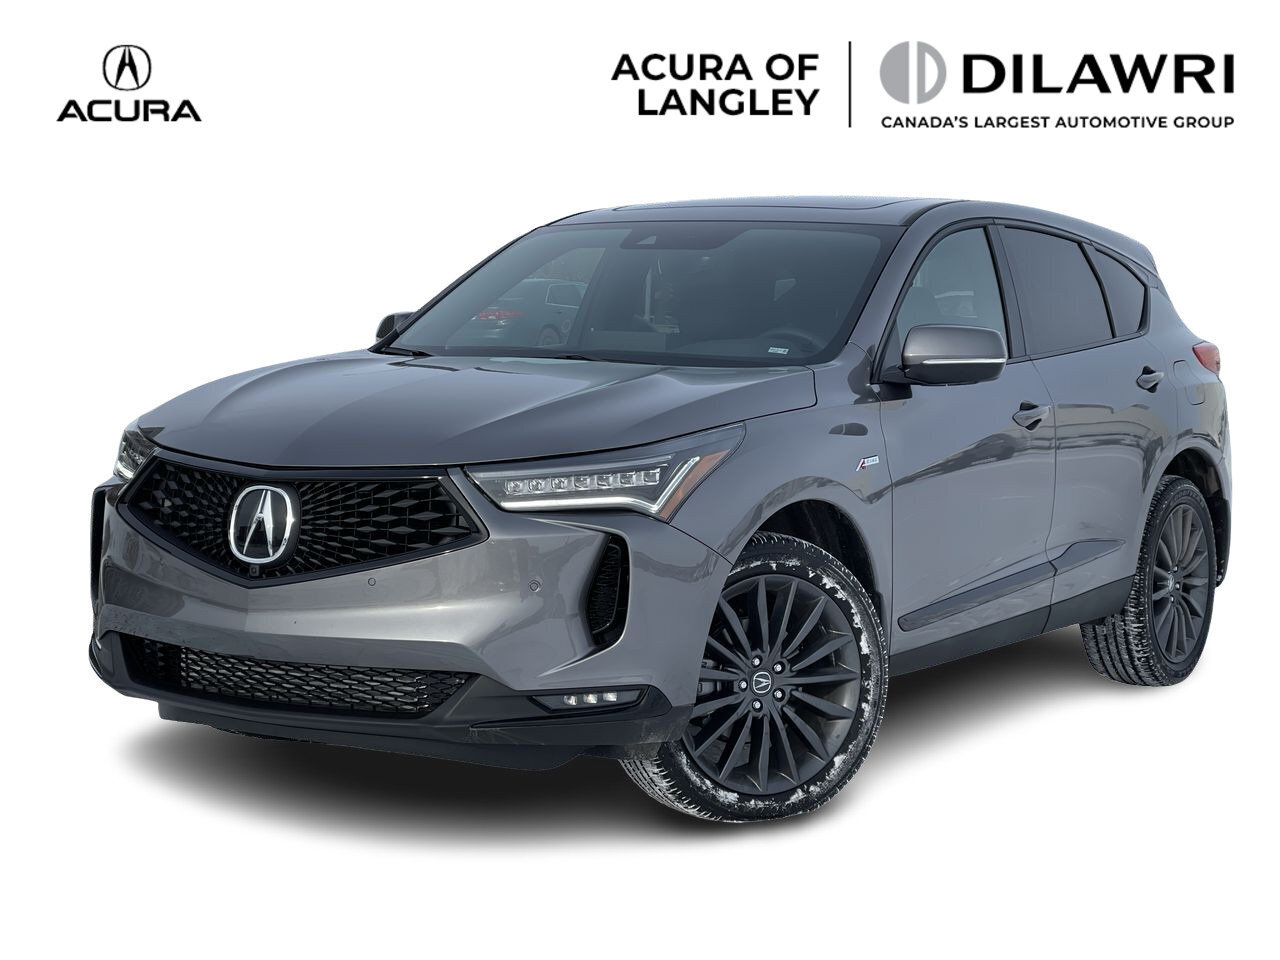 2023 Acura RDX Platinum Elite A-SPEC | DILAWRI DAYS TO SAVE |